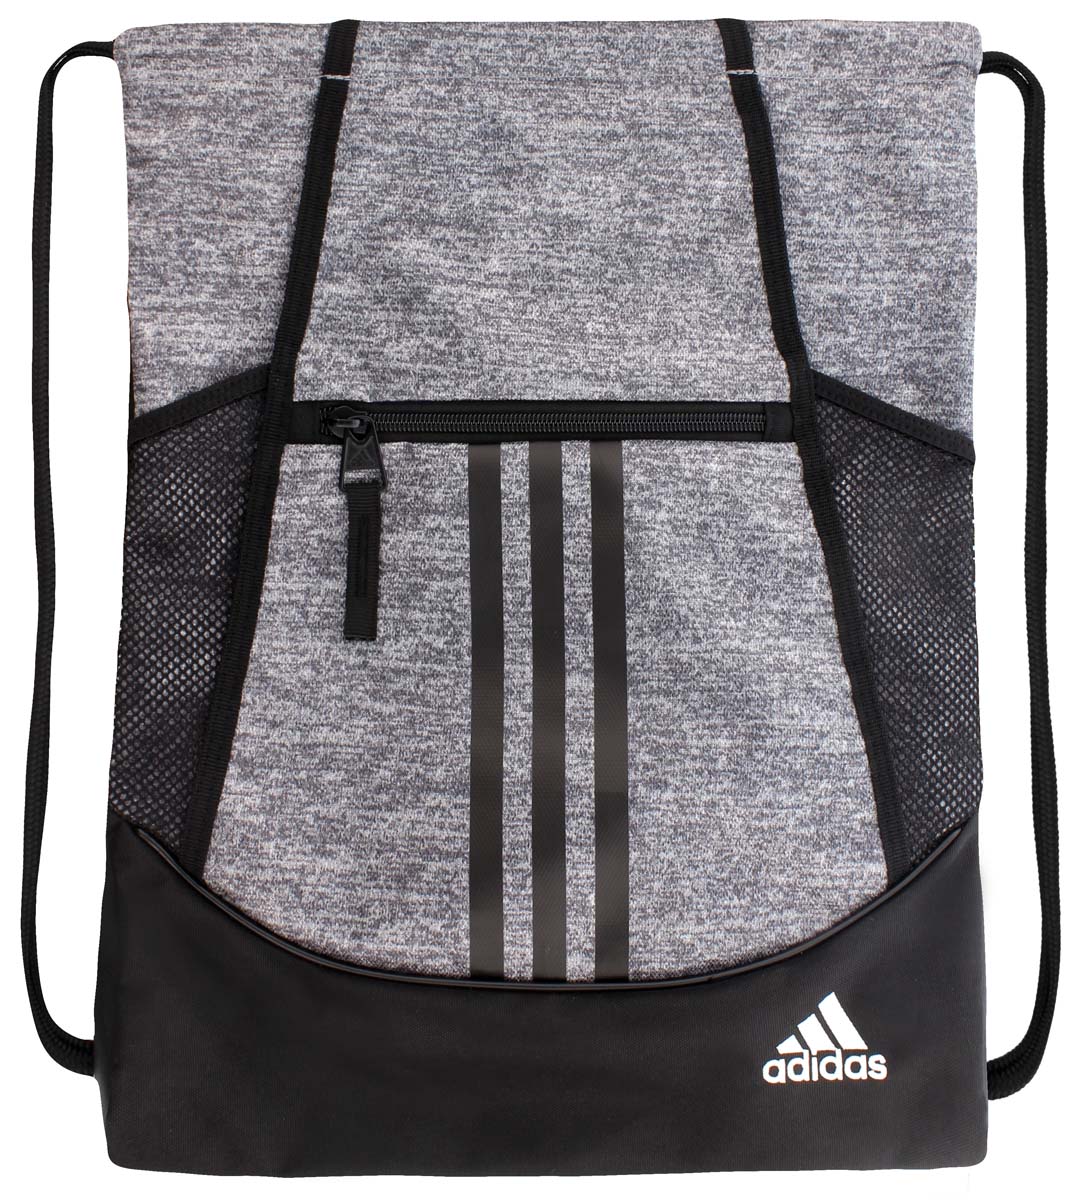 Adidas Men's Alliance Ii Sackpack Sling Backpack Gray Size Regular - image 2 of 2